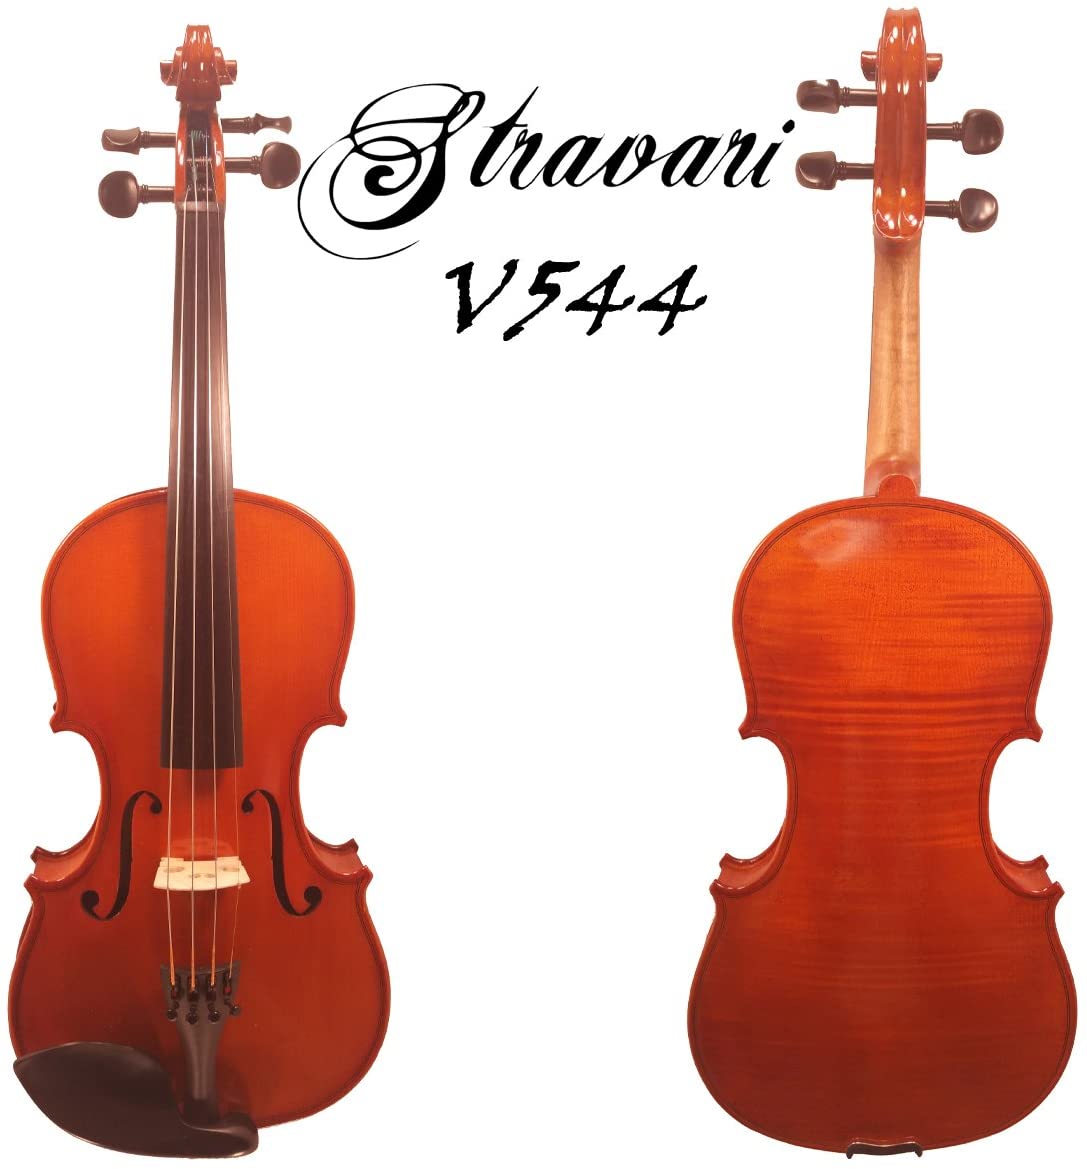 V544 Violin - Full-Size Intermediate Handcrafted Violin